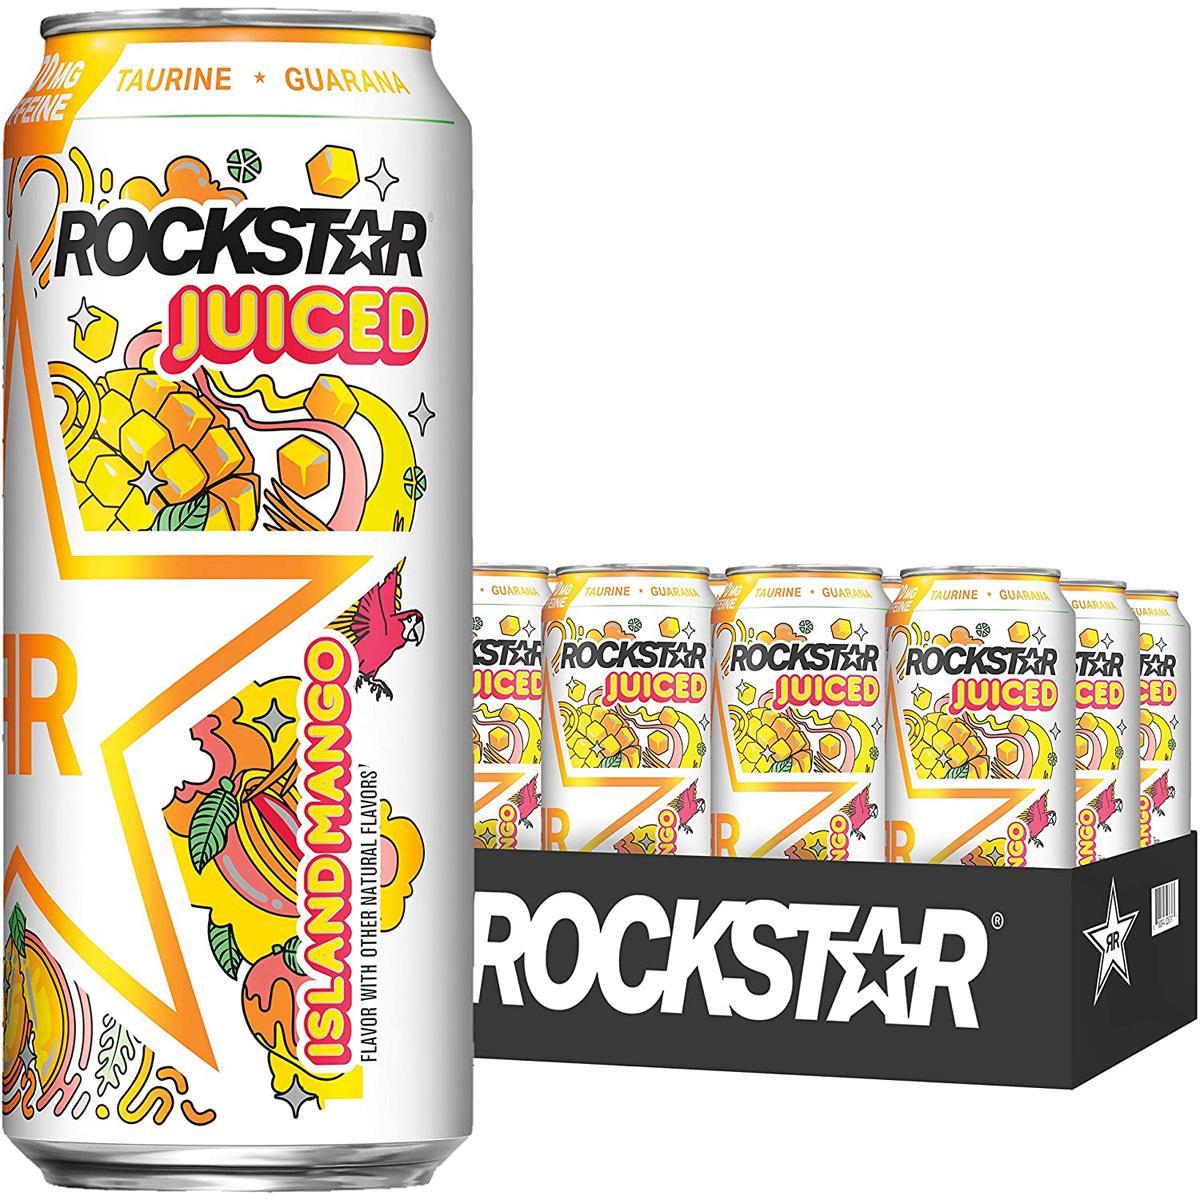 12 Rockstar Juiced Island Mango Energy Drinks for $13.32